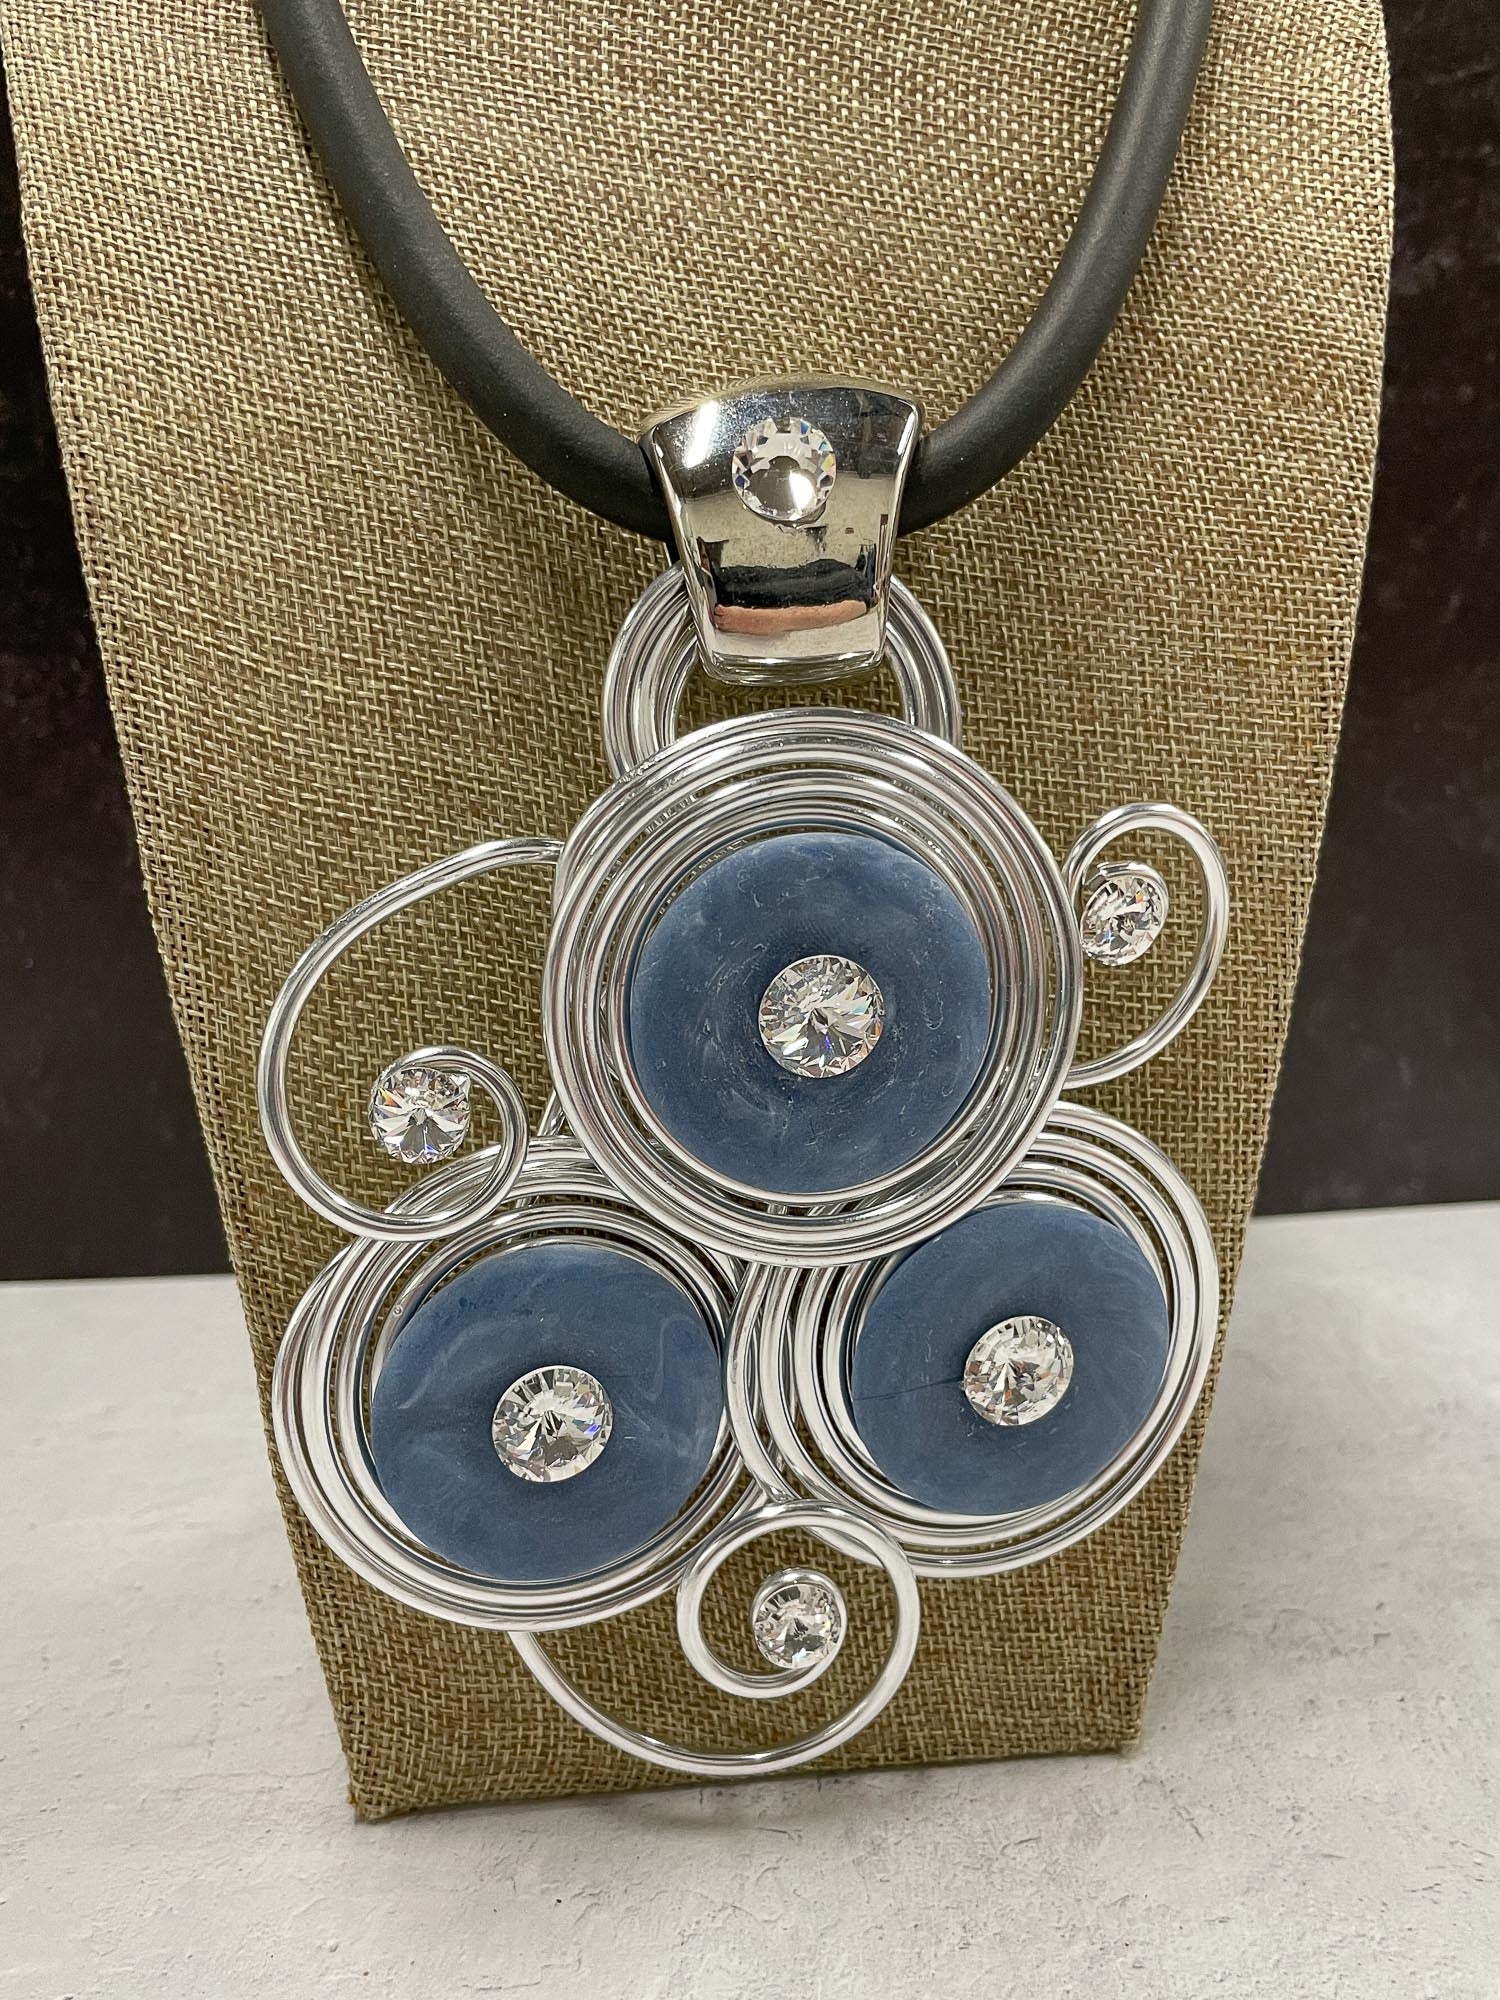 Jeff Lieb Total Design Jewelry Trio Resin & Wire Pendant Rubber Cord Necklace, Blue - Statement Boutique